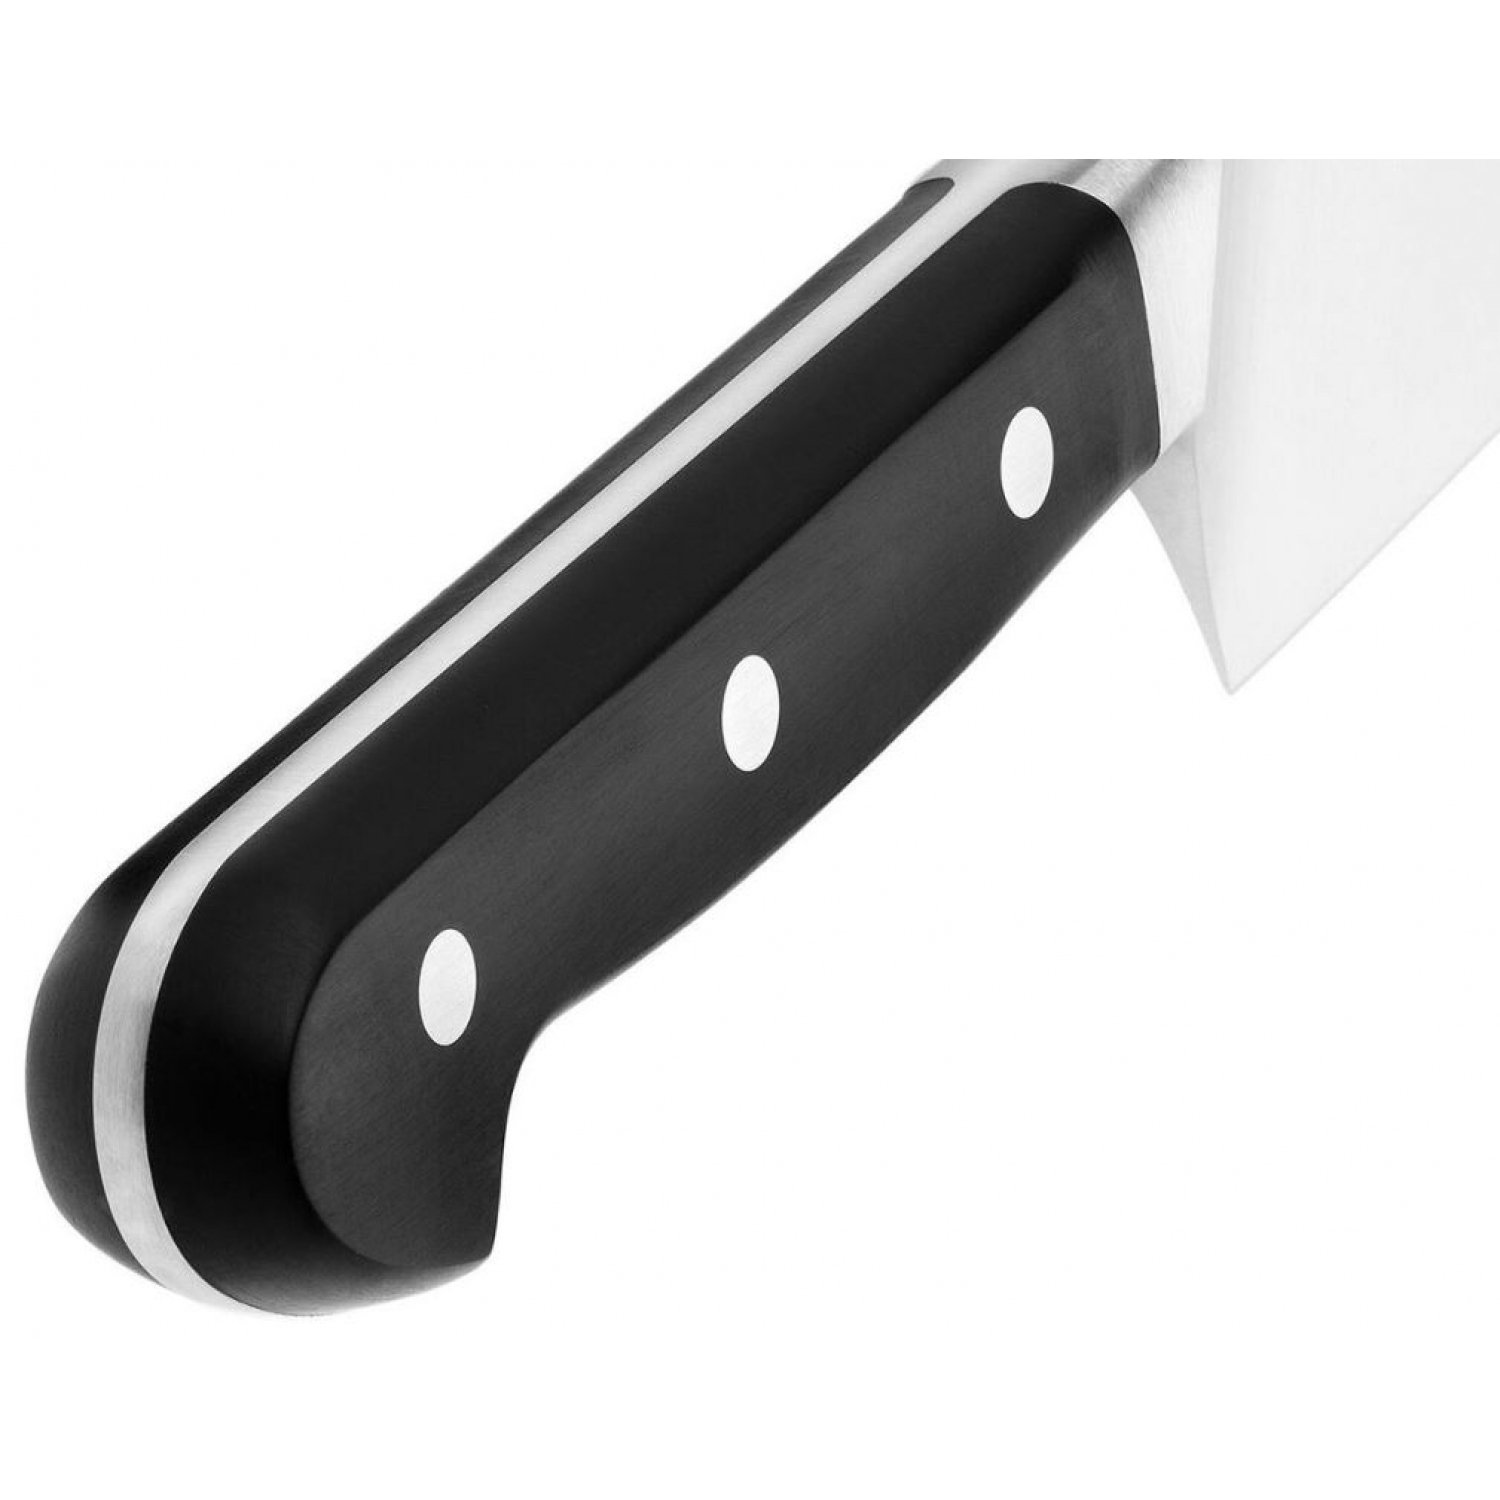 Boning kitchen knife Zwilling J.A.Henckels Pro 38404-141-0 14cm